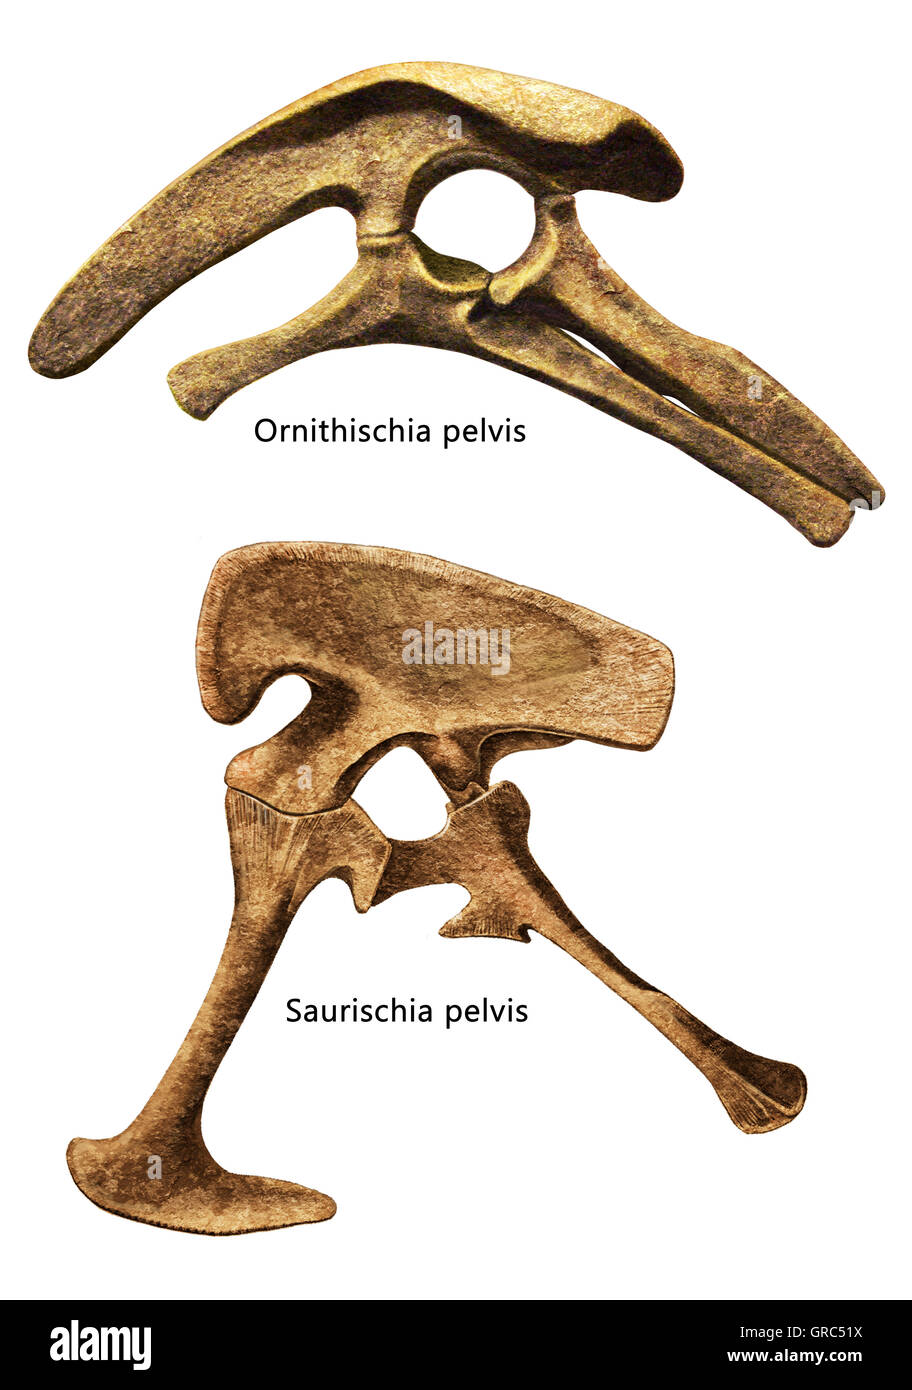 Ornithischia pelvis and Saurischia pelvis isolated white background Stock Photo